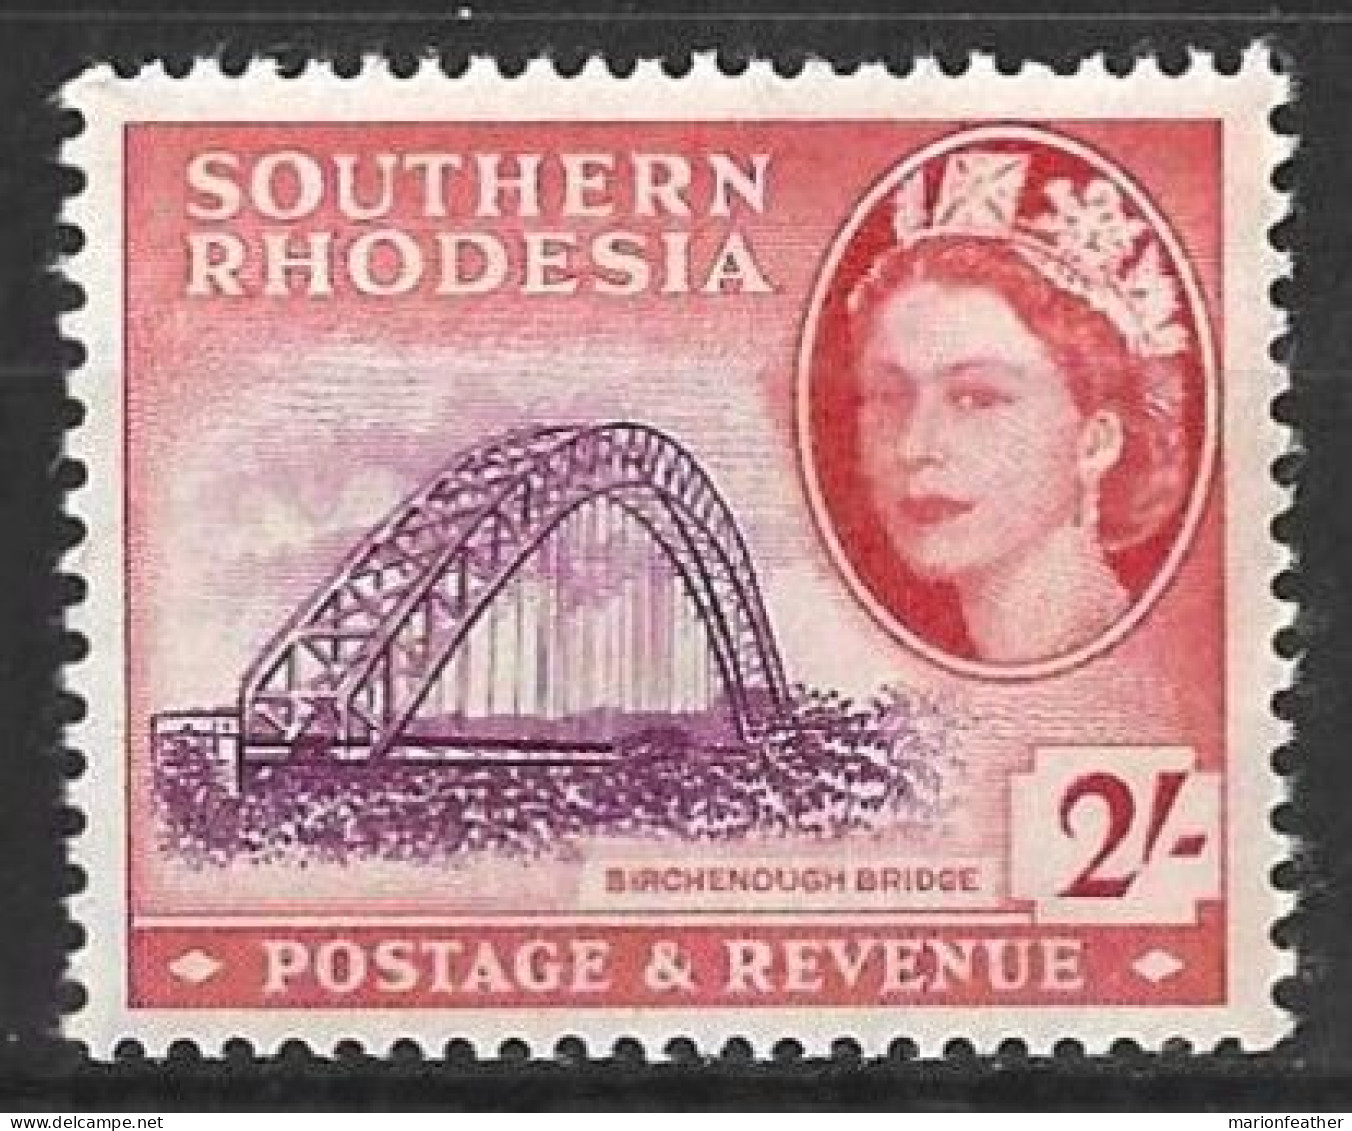 SOUTHERN RHODESIA....QUEENELIZABETH .II..(1952-22.)...." 1953."......2/-.....SG87.......MNH.. - Southern Rhodesia (...-1964)